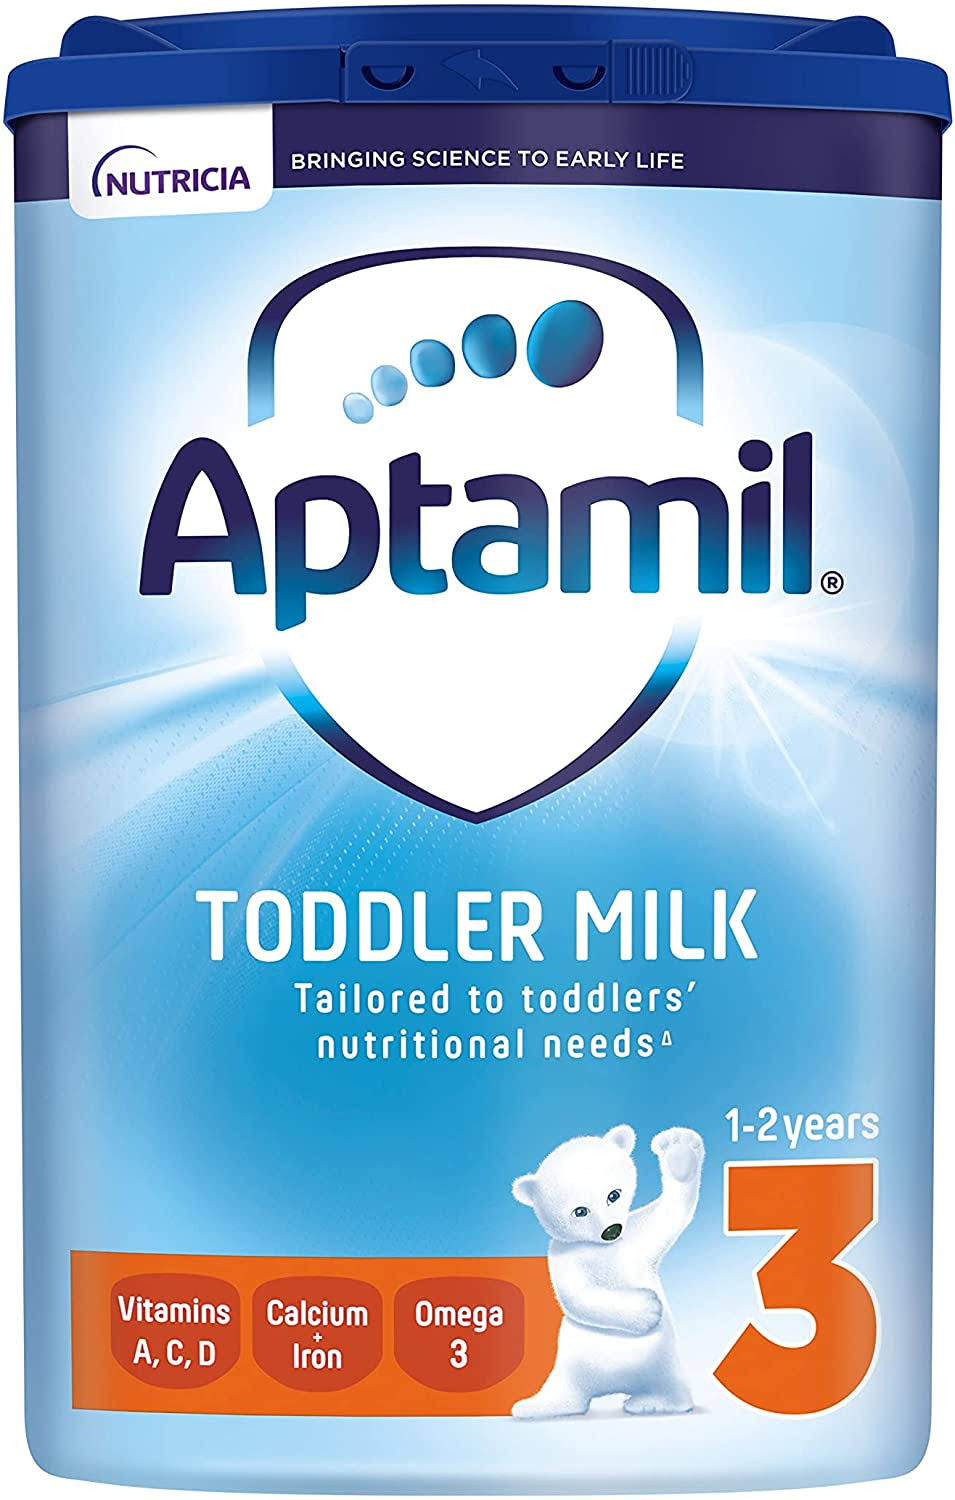 Aptamil Growing Up Milk Formula - 800g